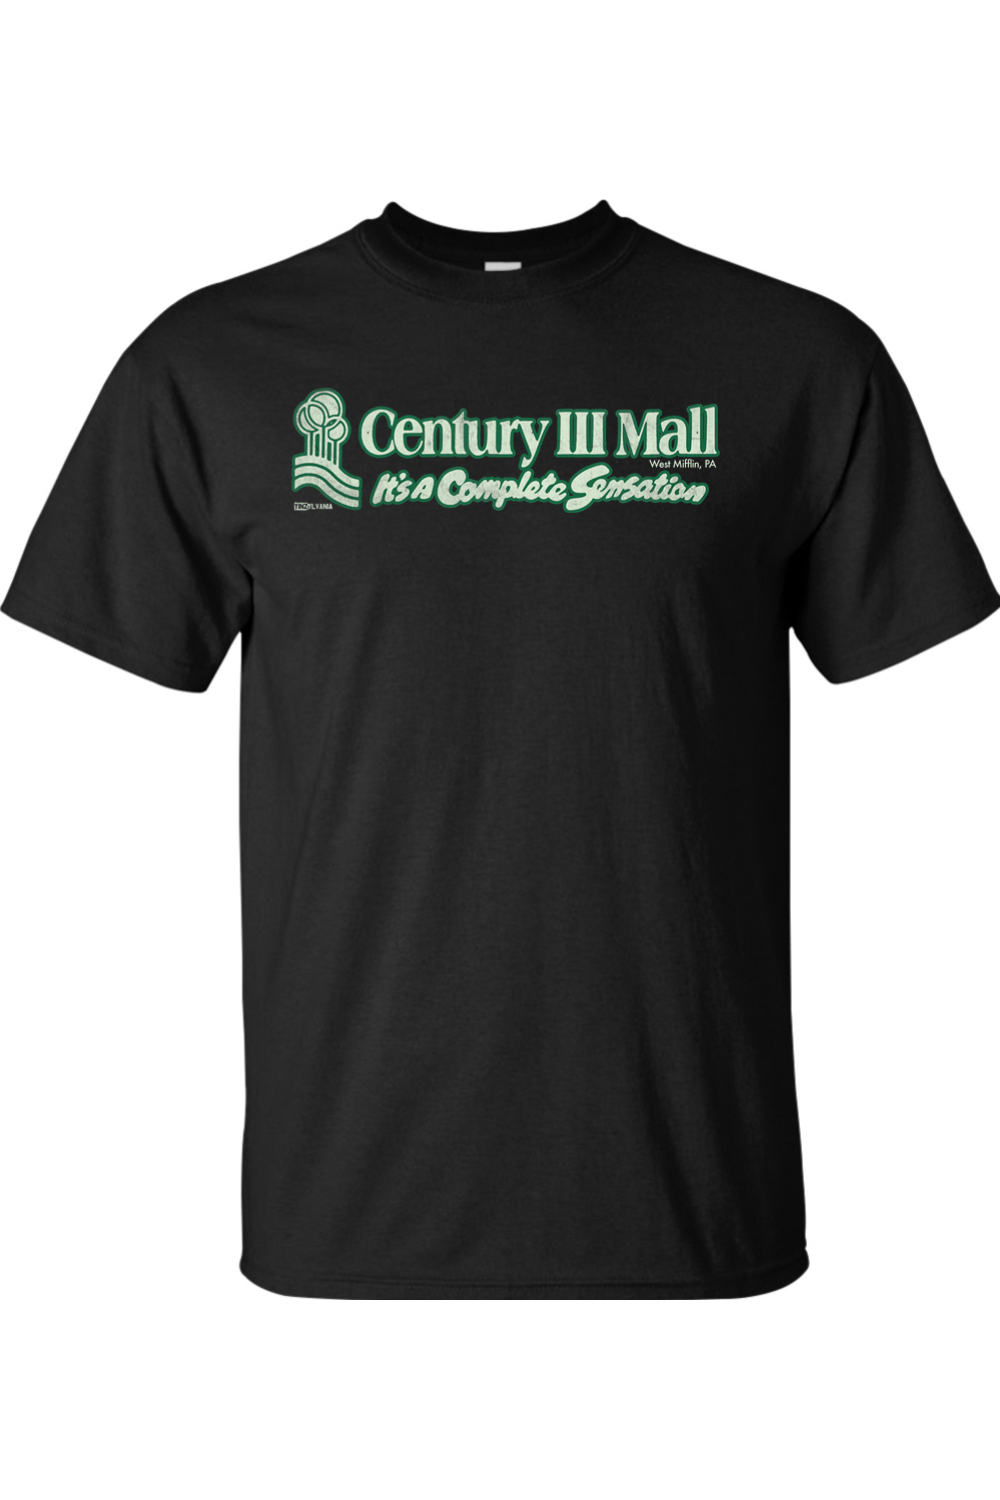 Century III Mall - West Mifflin - Big & Tall - Yinzylvania